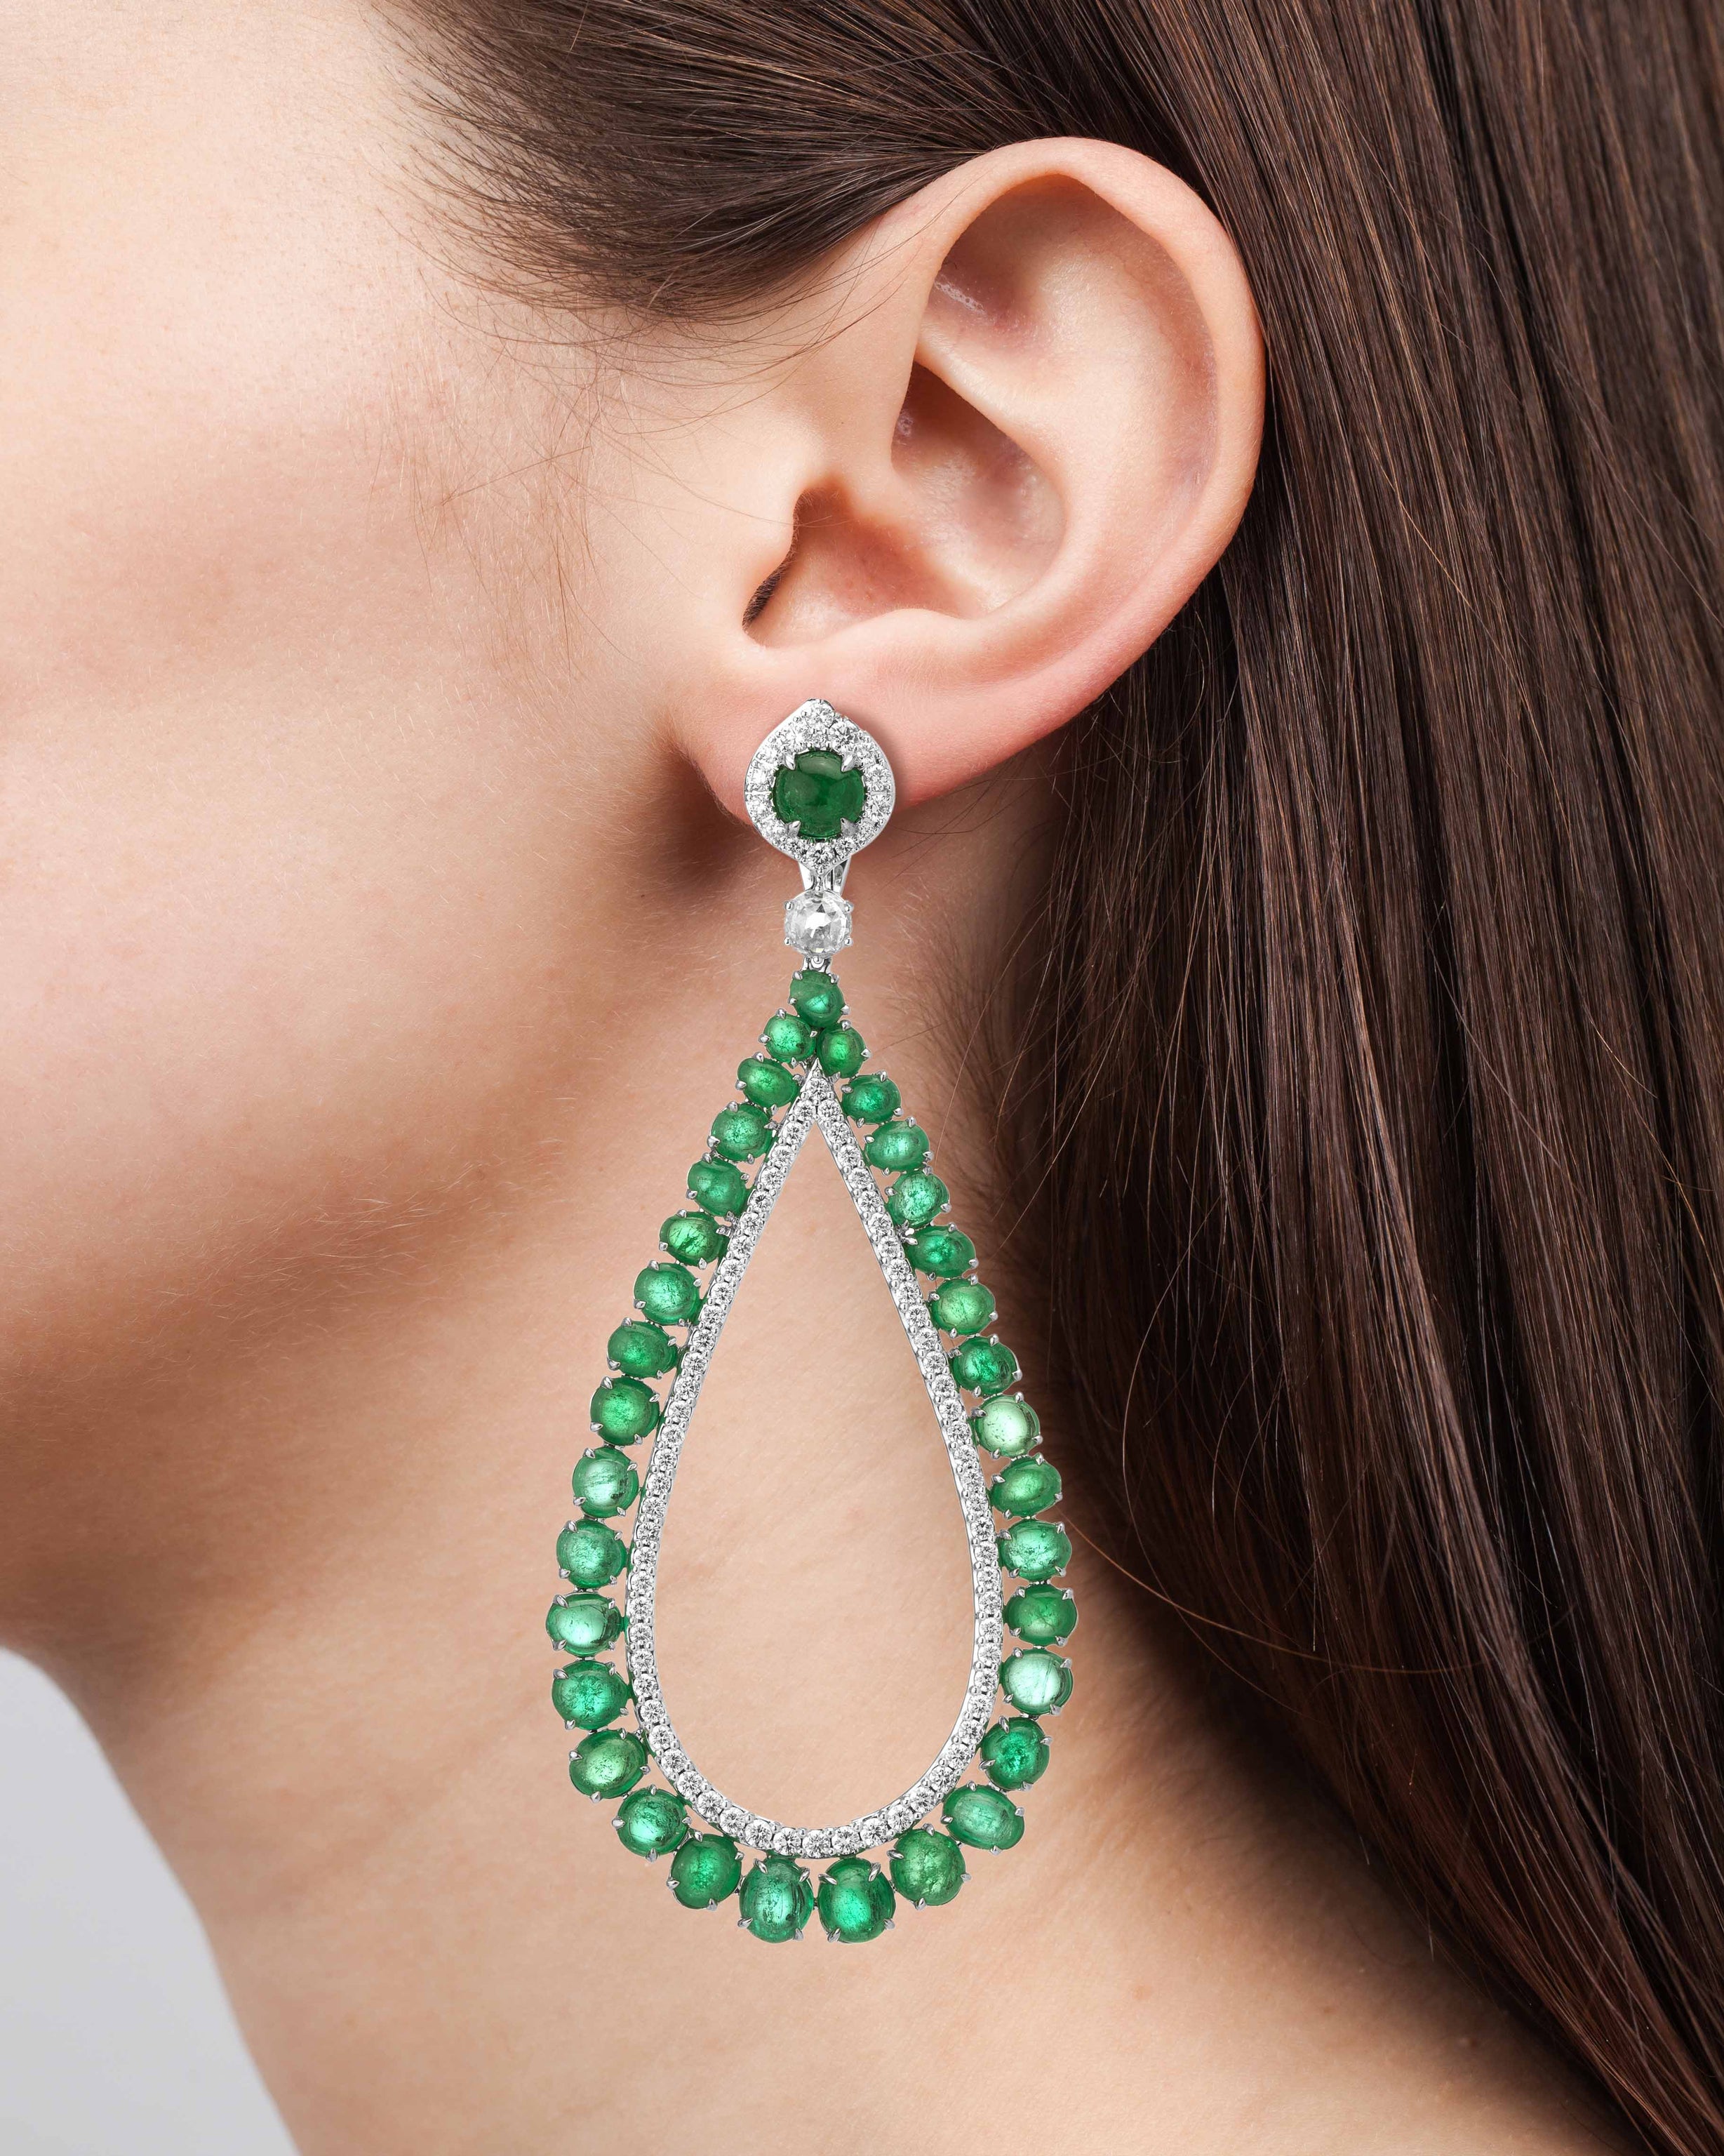 Ref: KA-21-Verity-chandelier-earrings-white-gold-diamonds-Emeralds ...